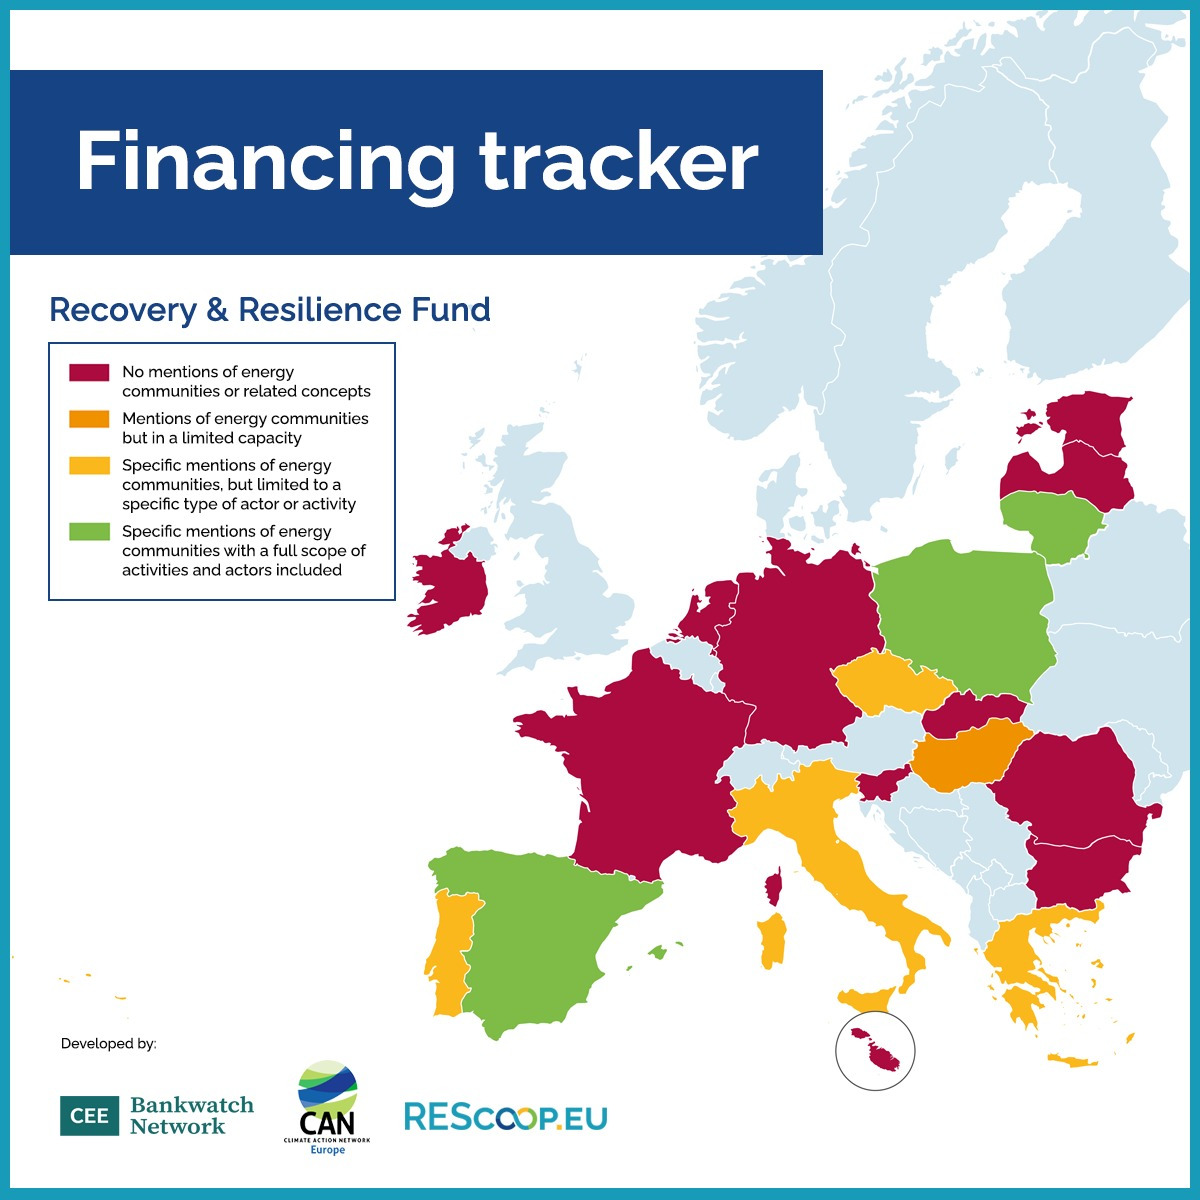 Finance tracker image